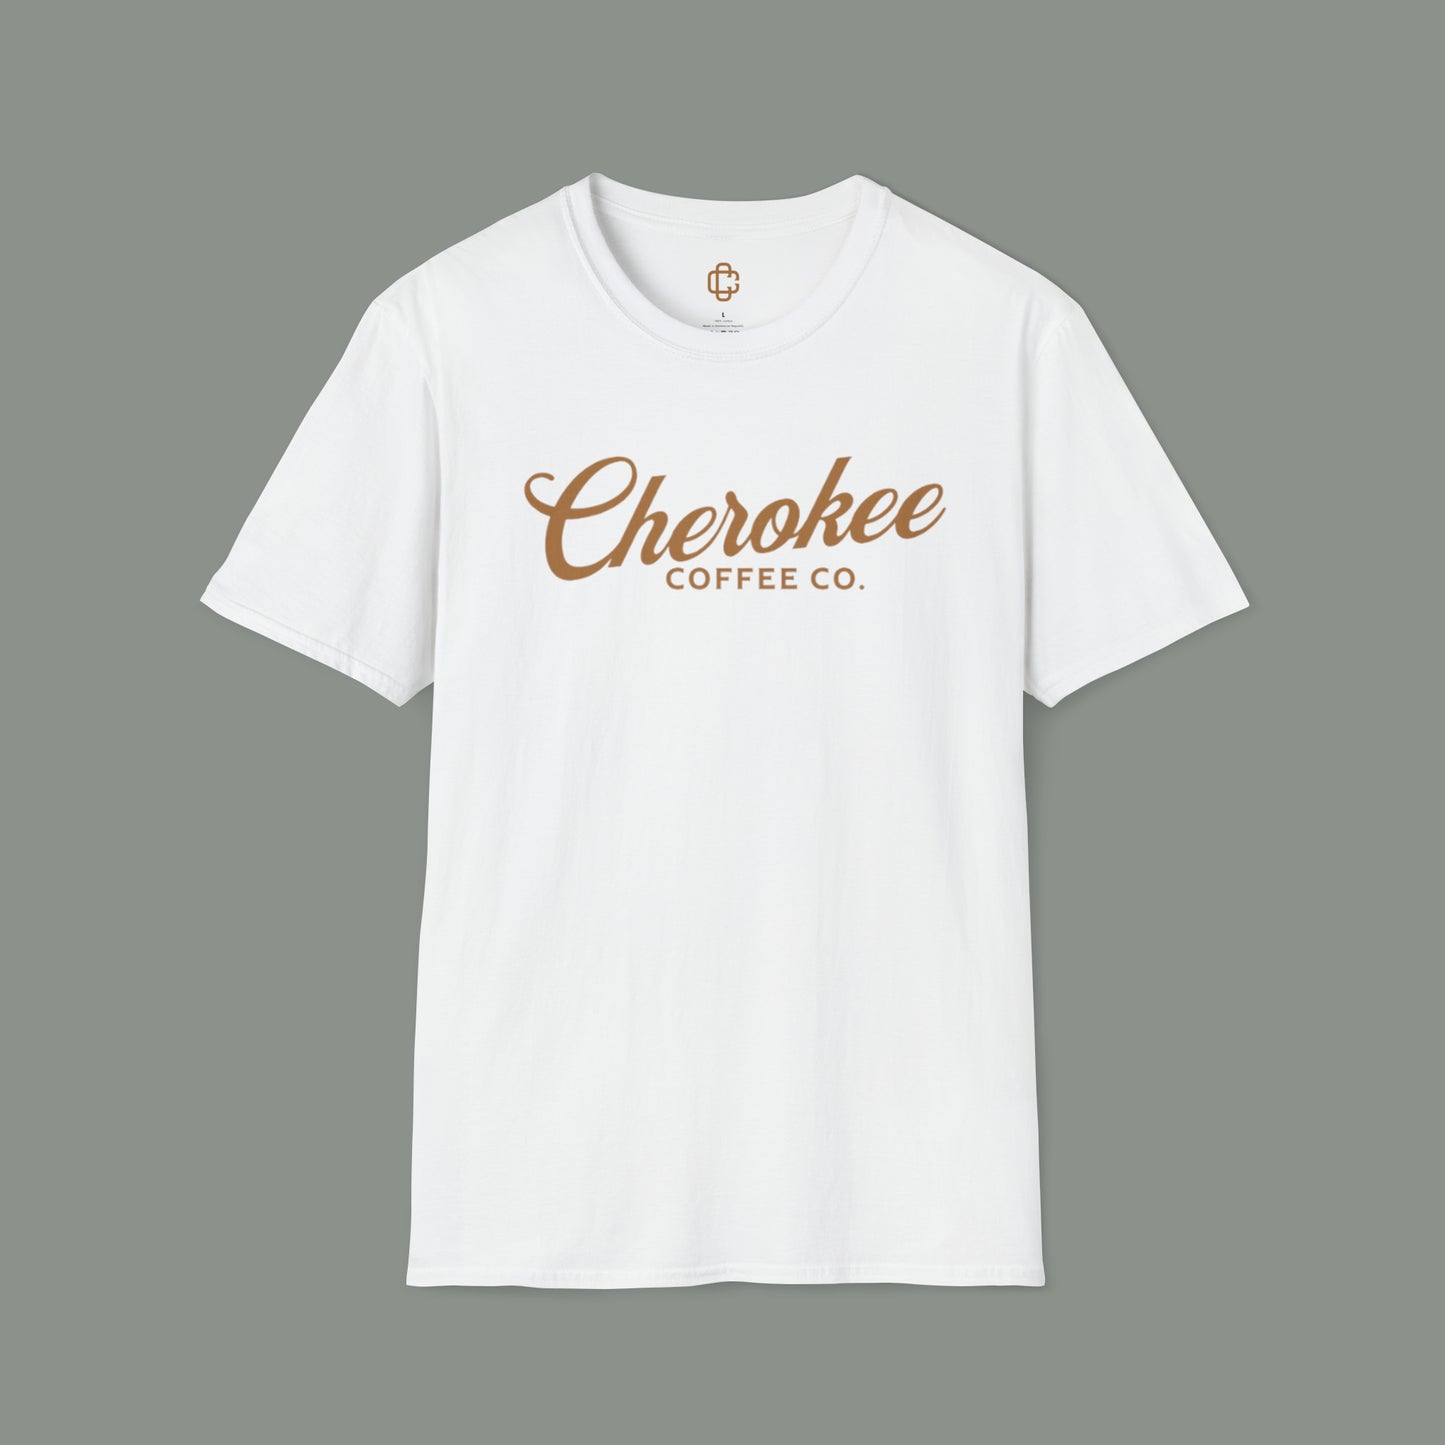 Everyday Cherokee Coffee Co logo T-shirt